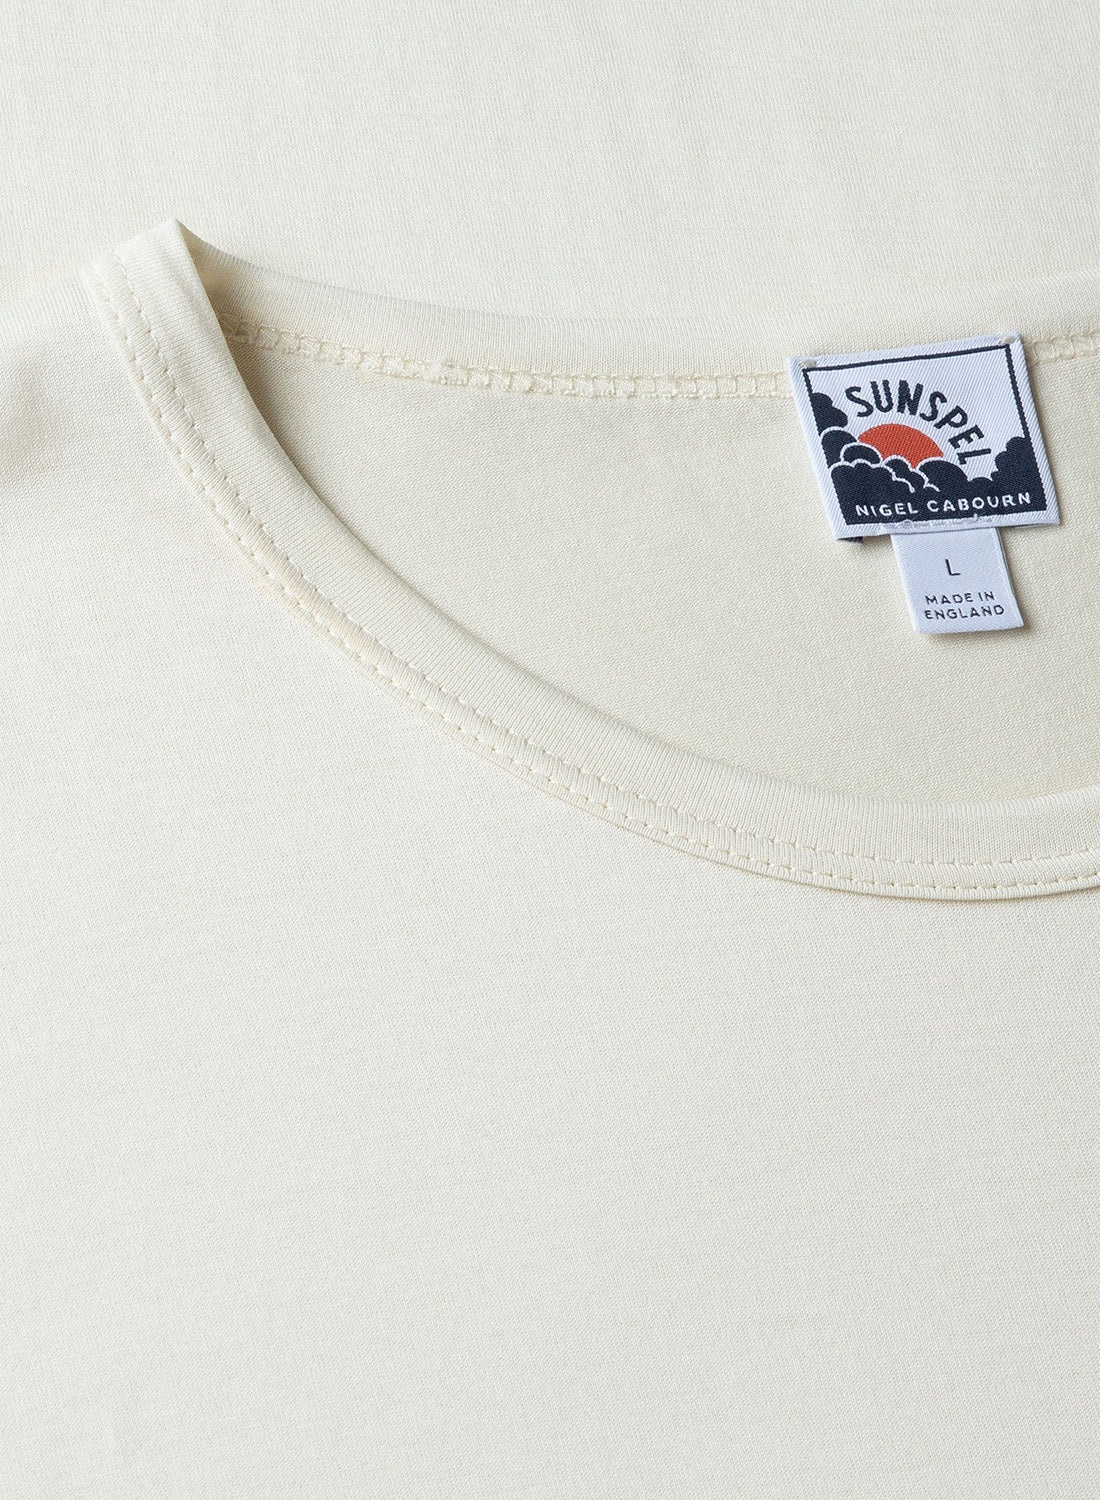 Nigel Cabourn x Sunspel Short Sleeve Pocket T-Shirt in Stone White - 2